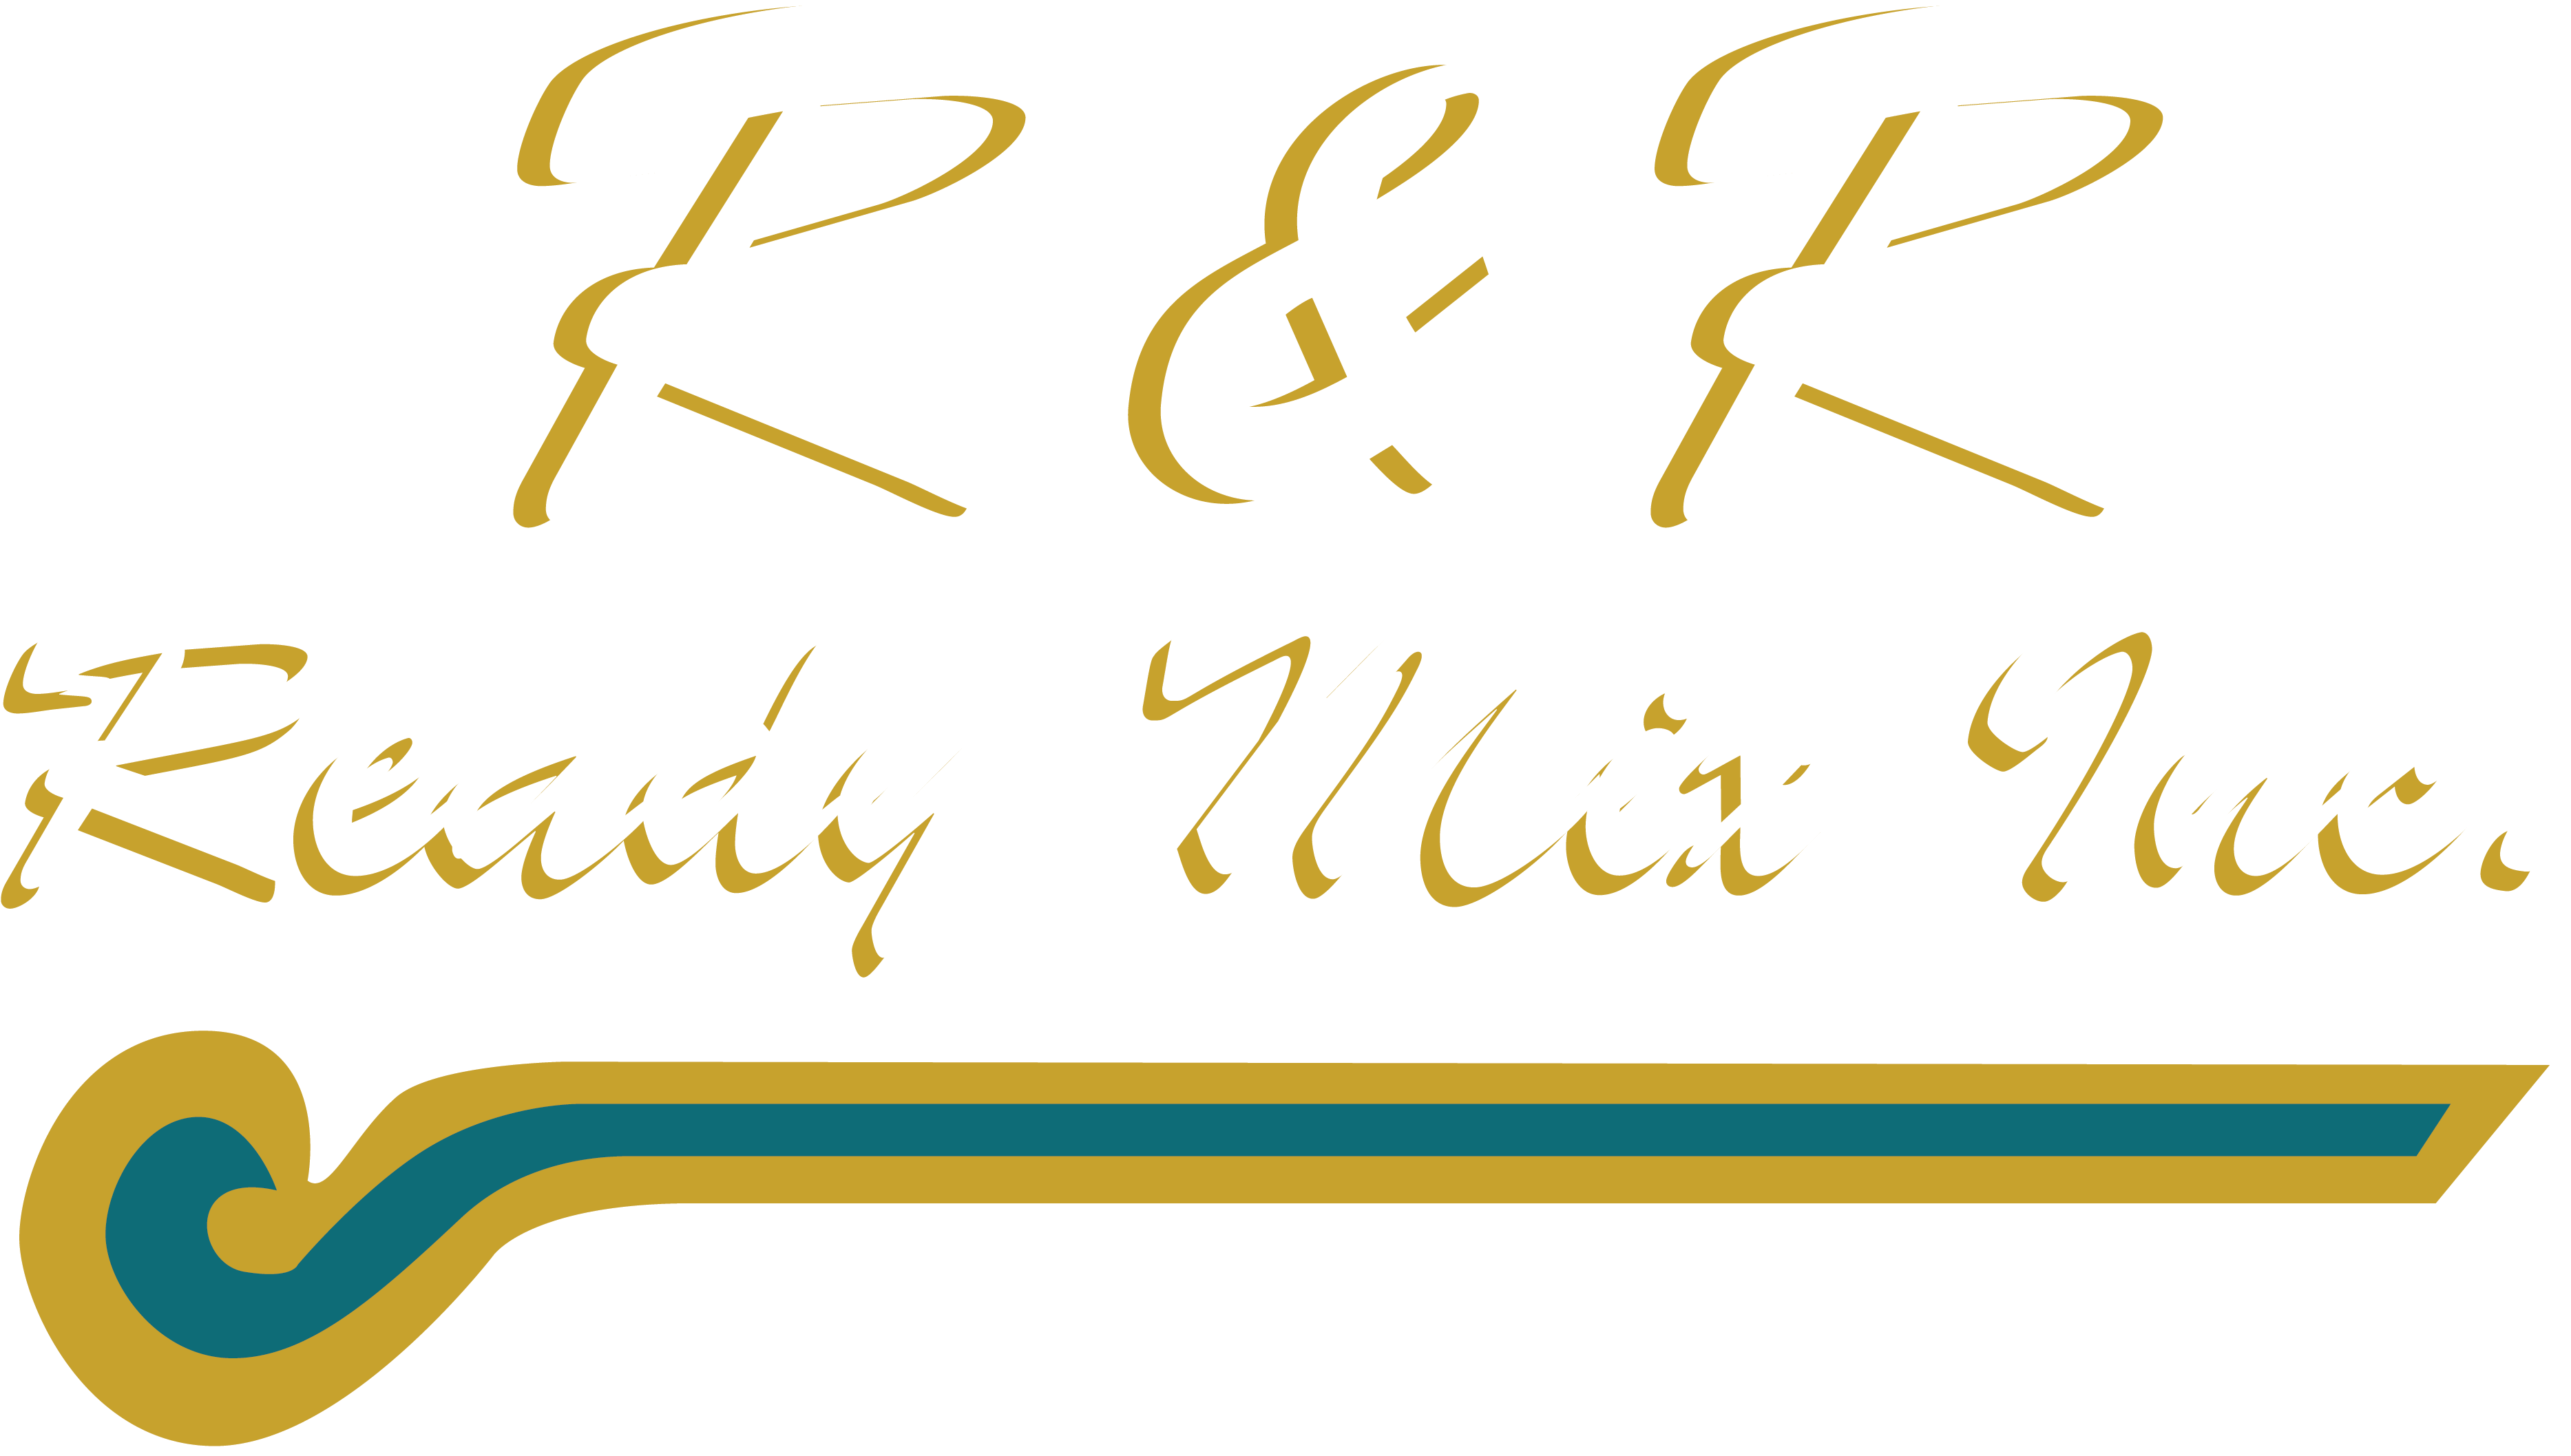 Make R&r Ready Mix, Inc - Calligraphy (4167x2500)